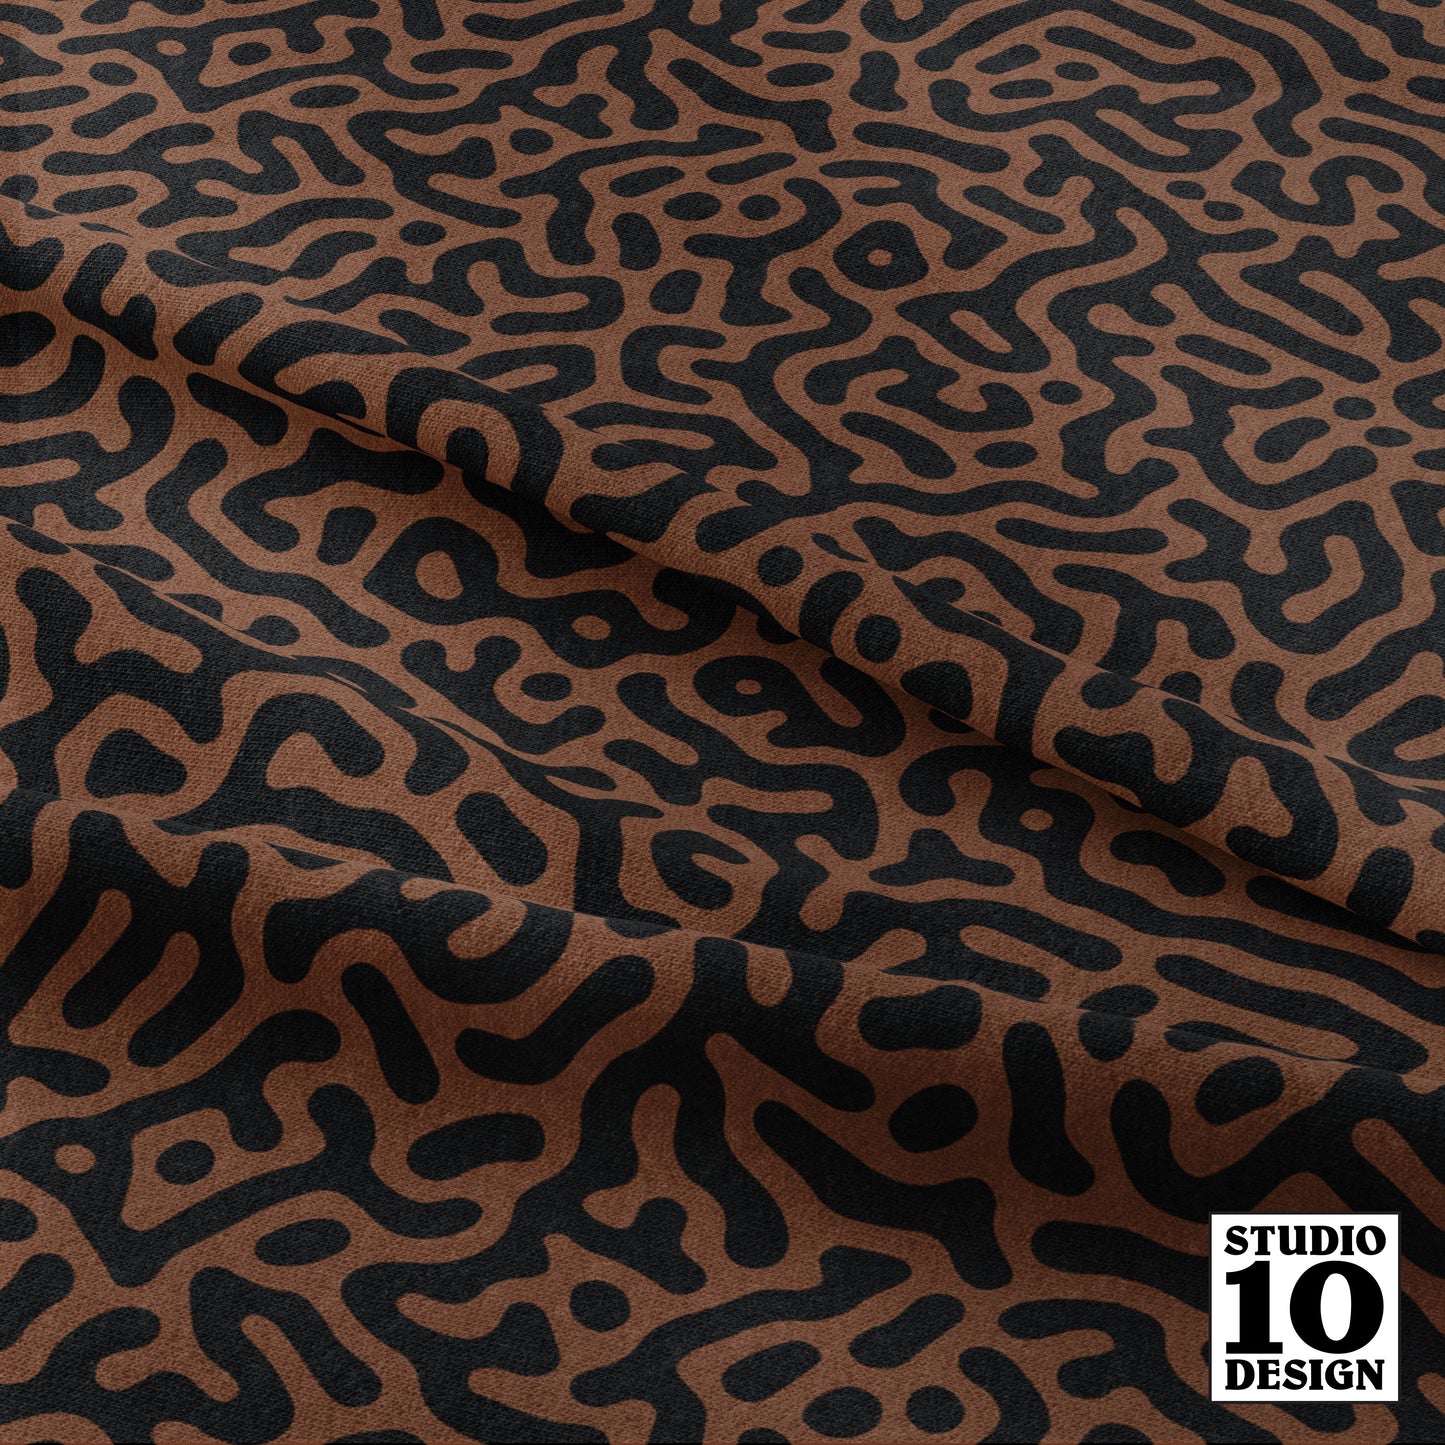 Turing Pattern I: Black + Cinnamon Printed Fabric by Studio Ten Design